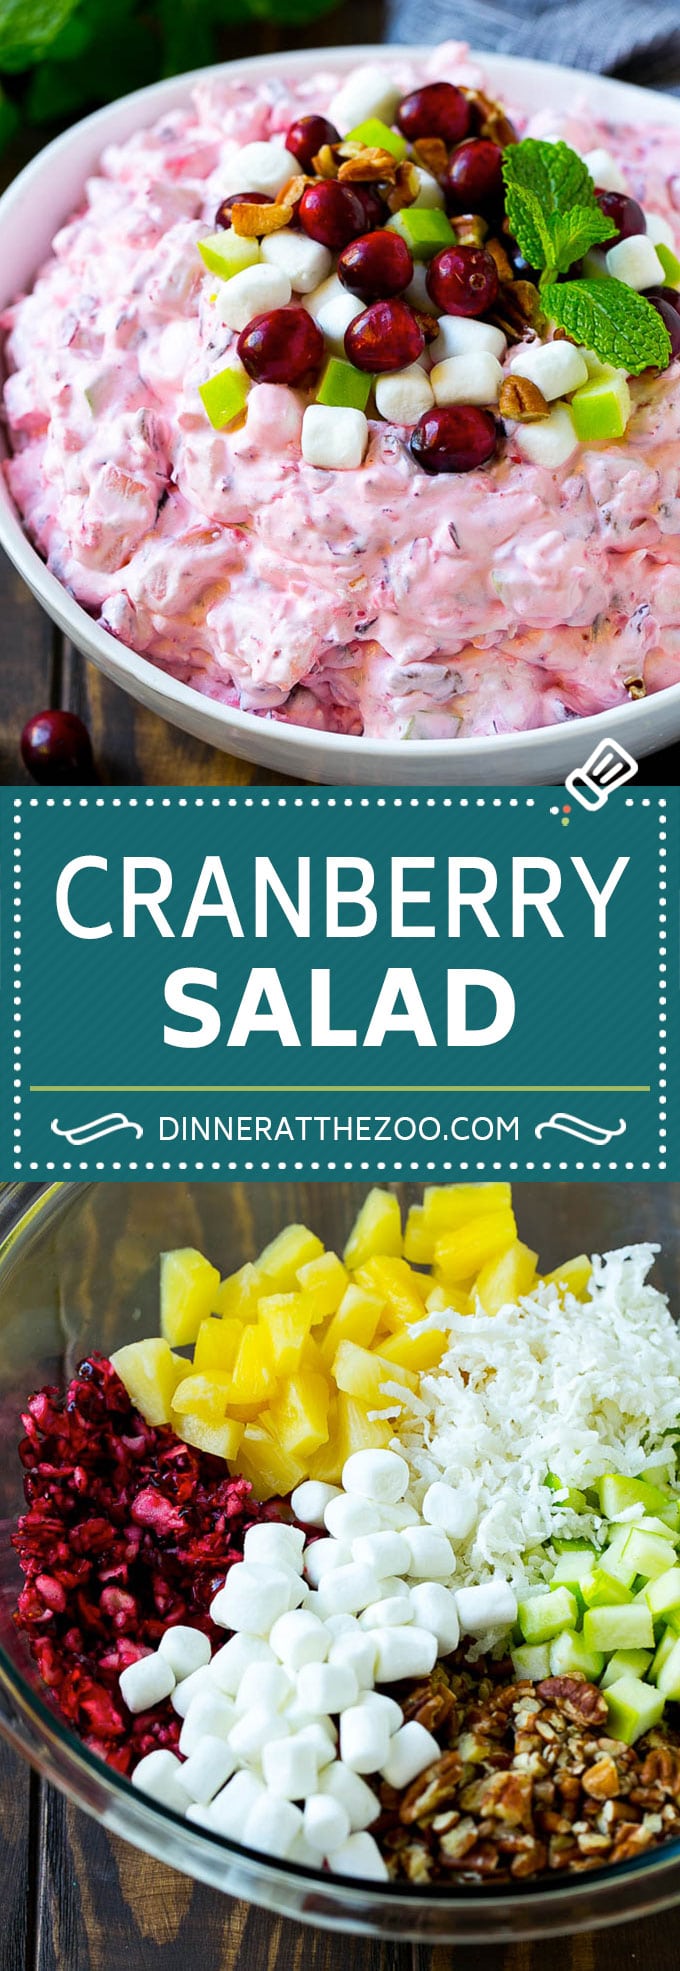 Cranberry Salad Recipe | Fluff Salad #cranberry #salad #fall #dinner #dinneratthezoo #thanksgiving